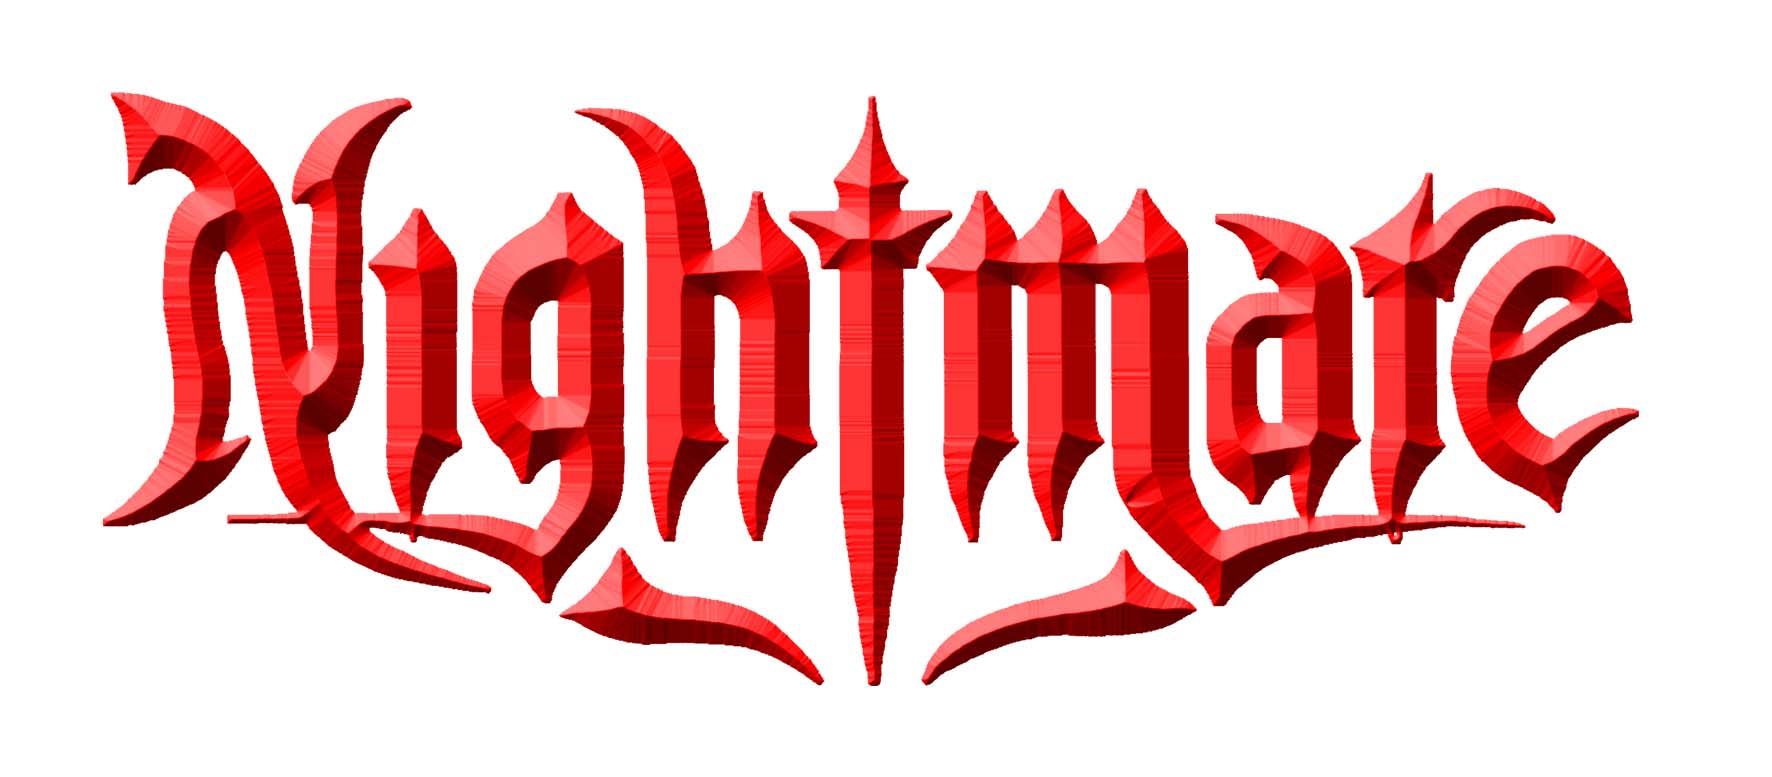 Nightmare - Awesome Metal!!!